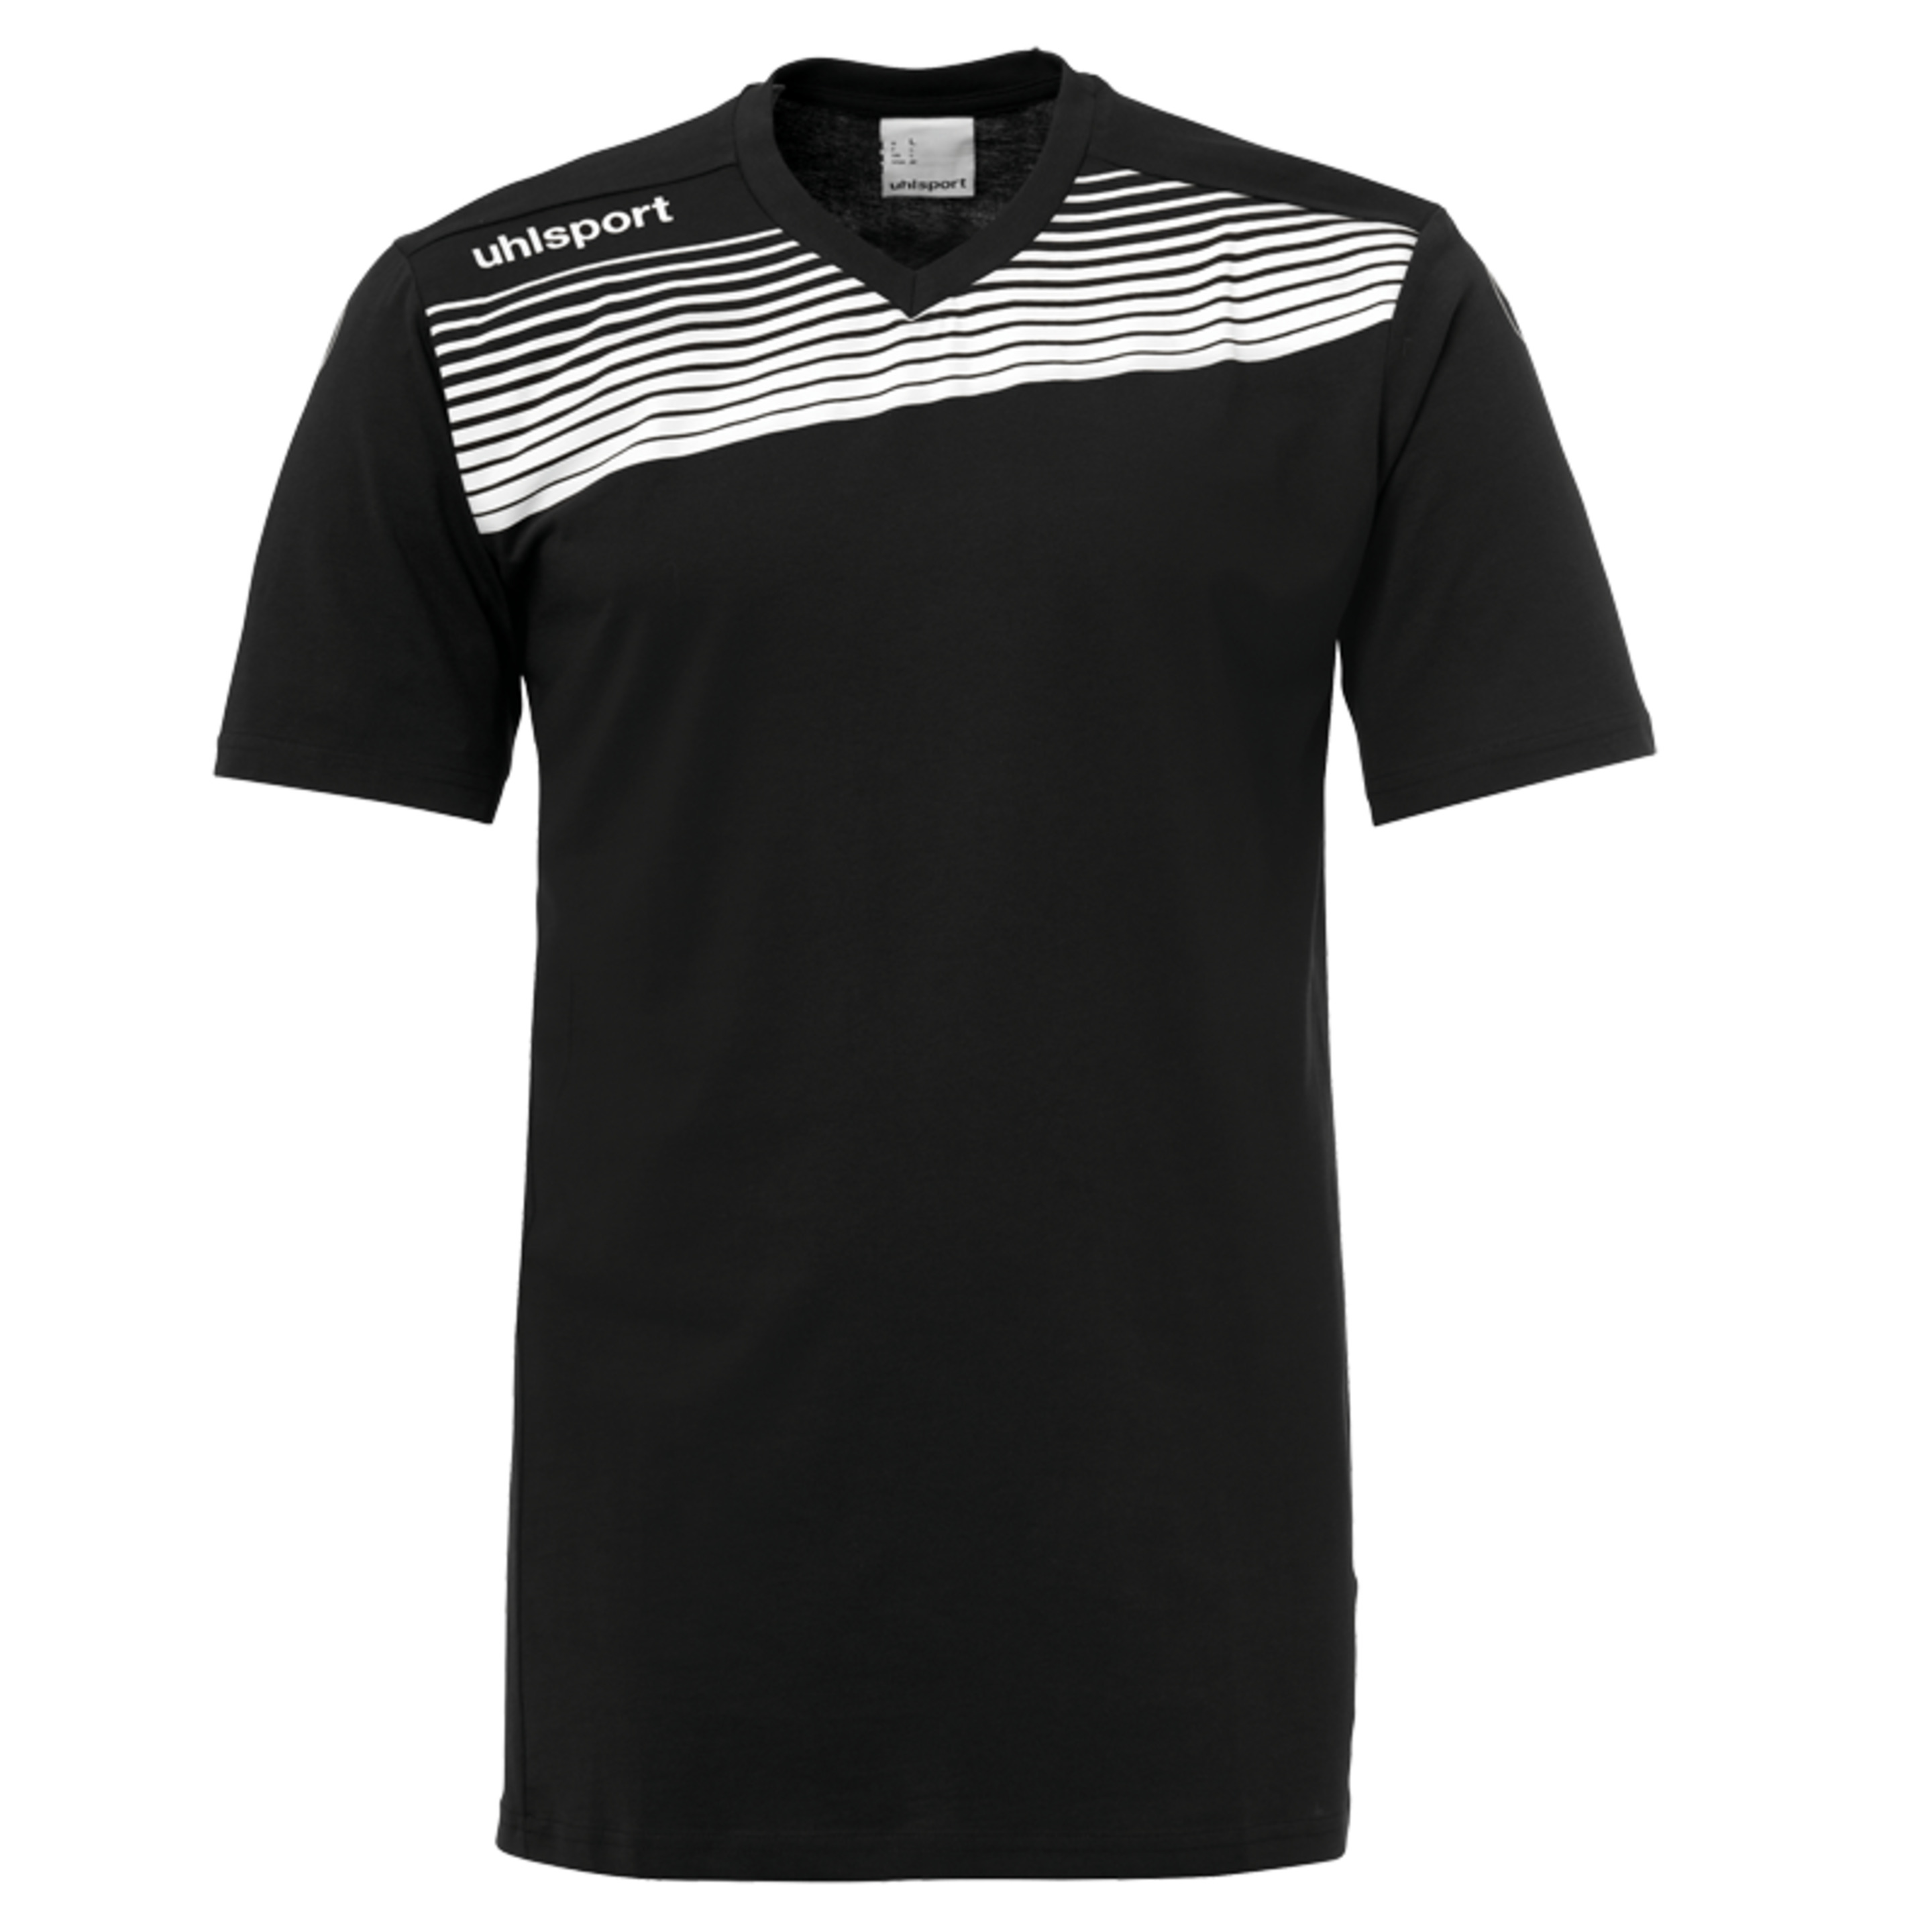 Liga 2.0 Camiseta De Entrenamiento Negro/blanco Uhlsport